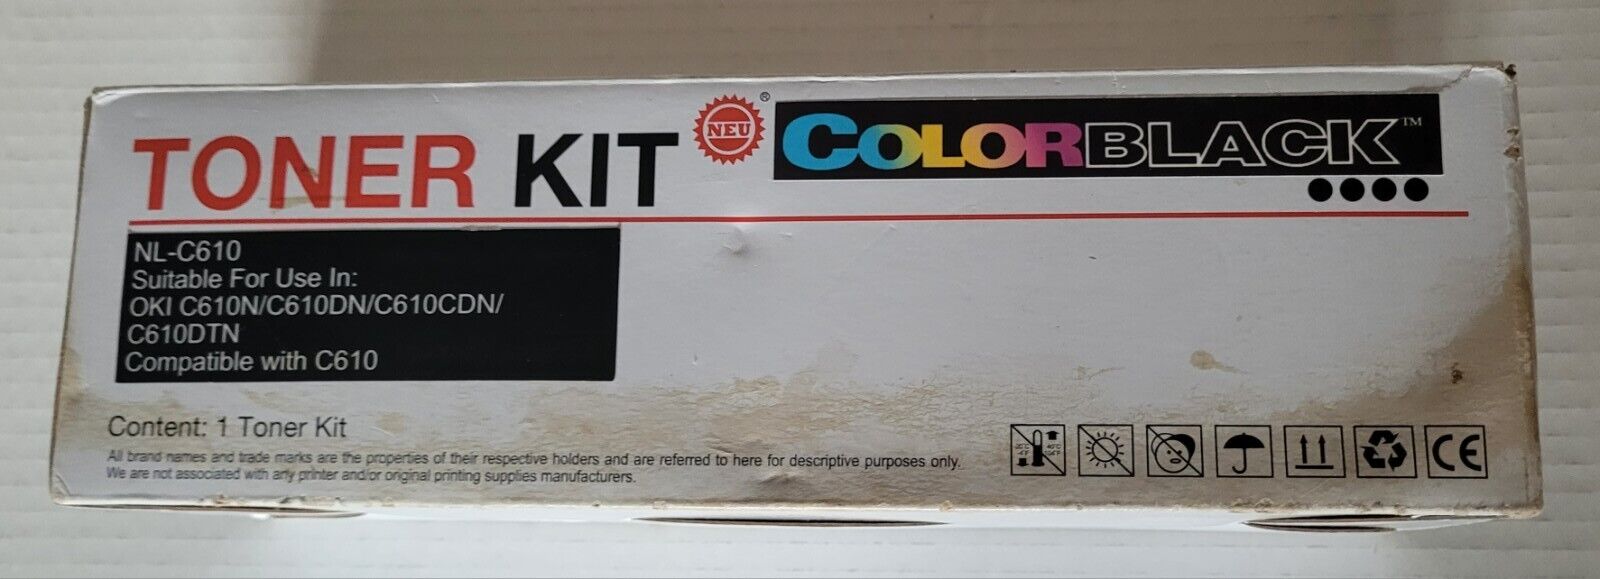 Toner Kit NEU Color Black Compatible NL-C610